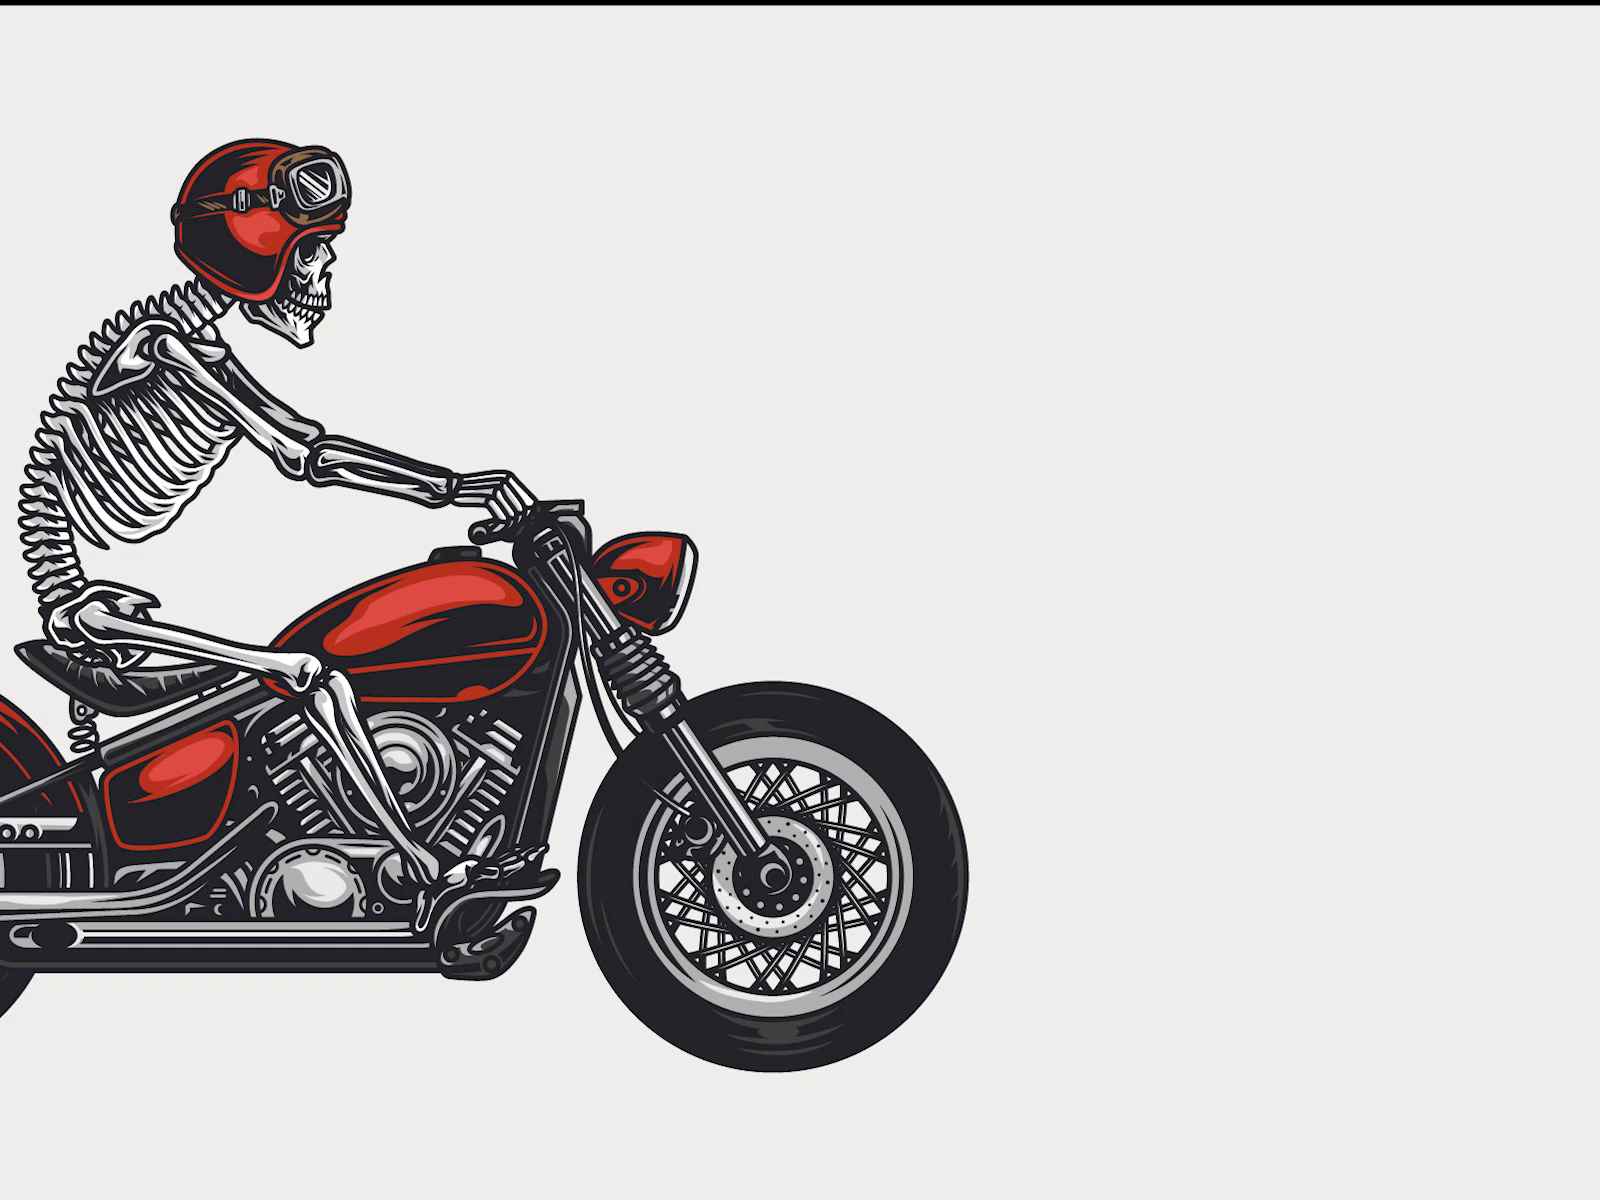 70 Cartoon Of Skeleton Riding Motorcycle Illustrations RoyaltyFree  Vector Graphics  Clip Art  iStock